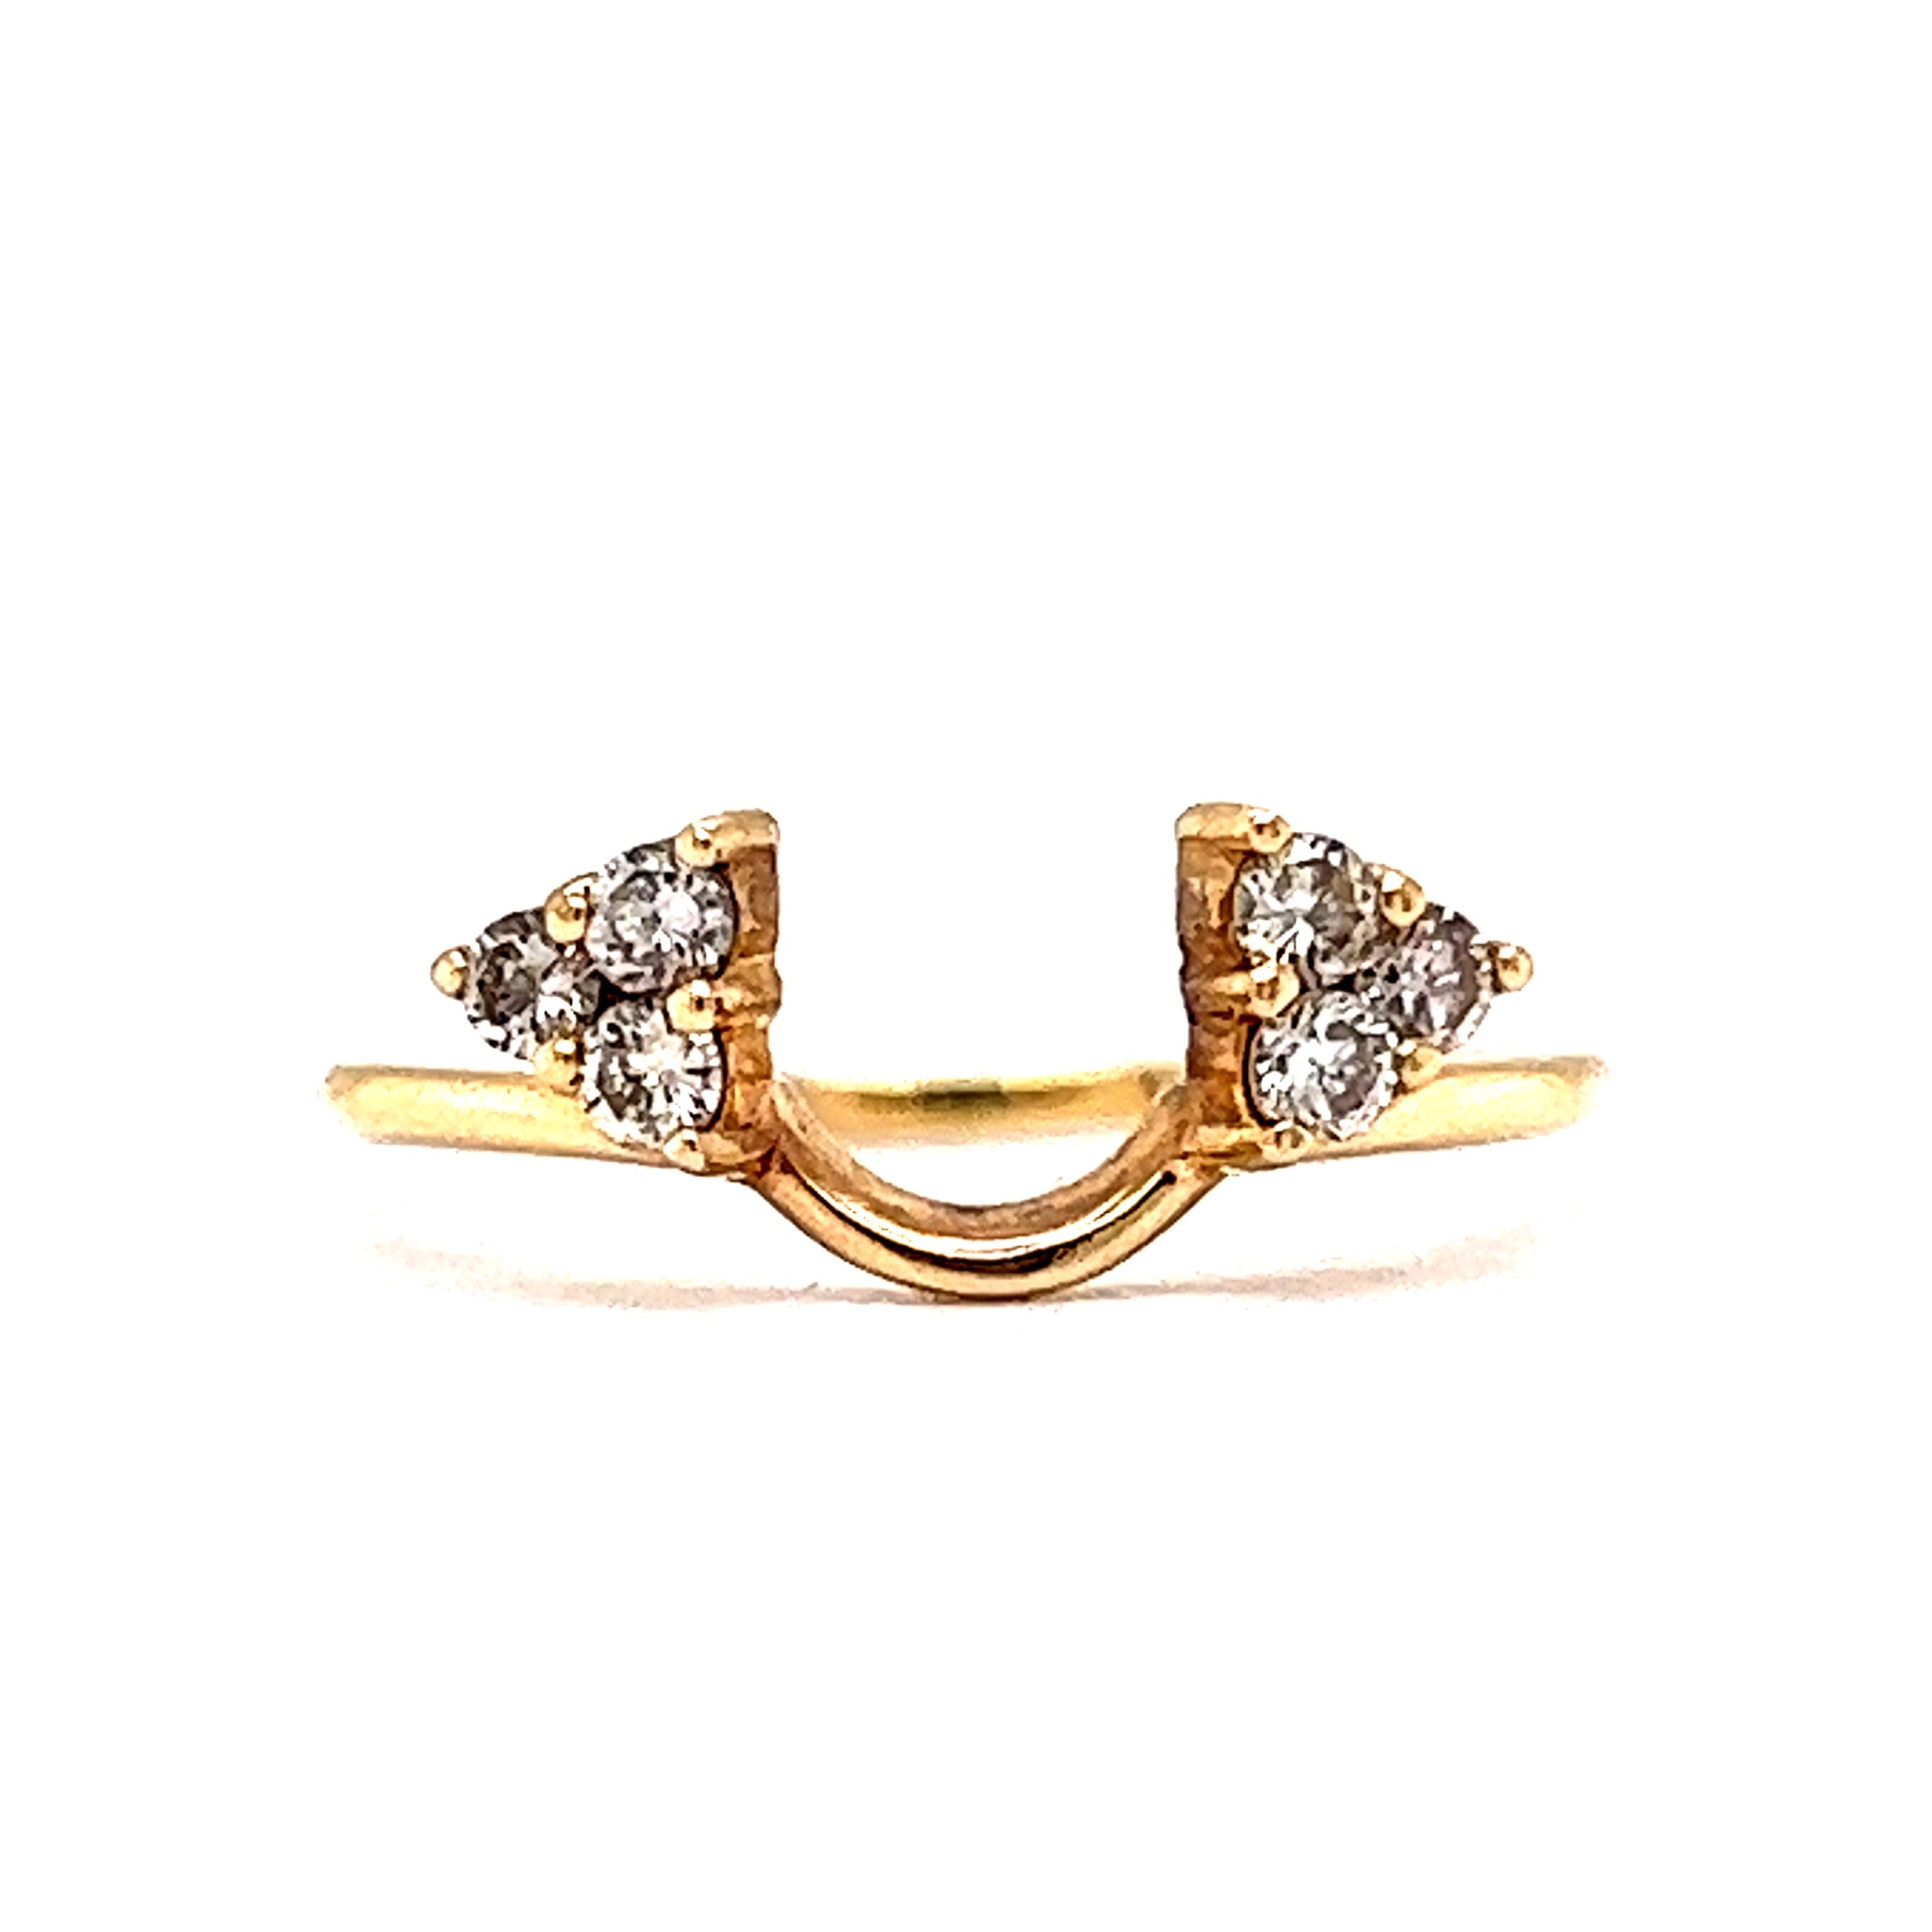 Swirl Diamond Engagement Ring Guard in 14k Yellow Gold | Shane Co.